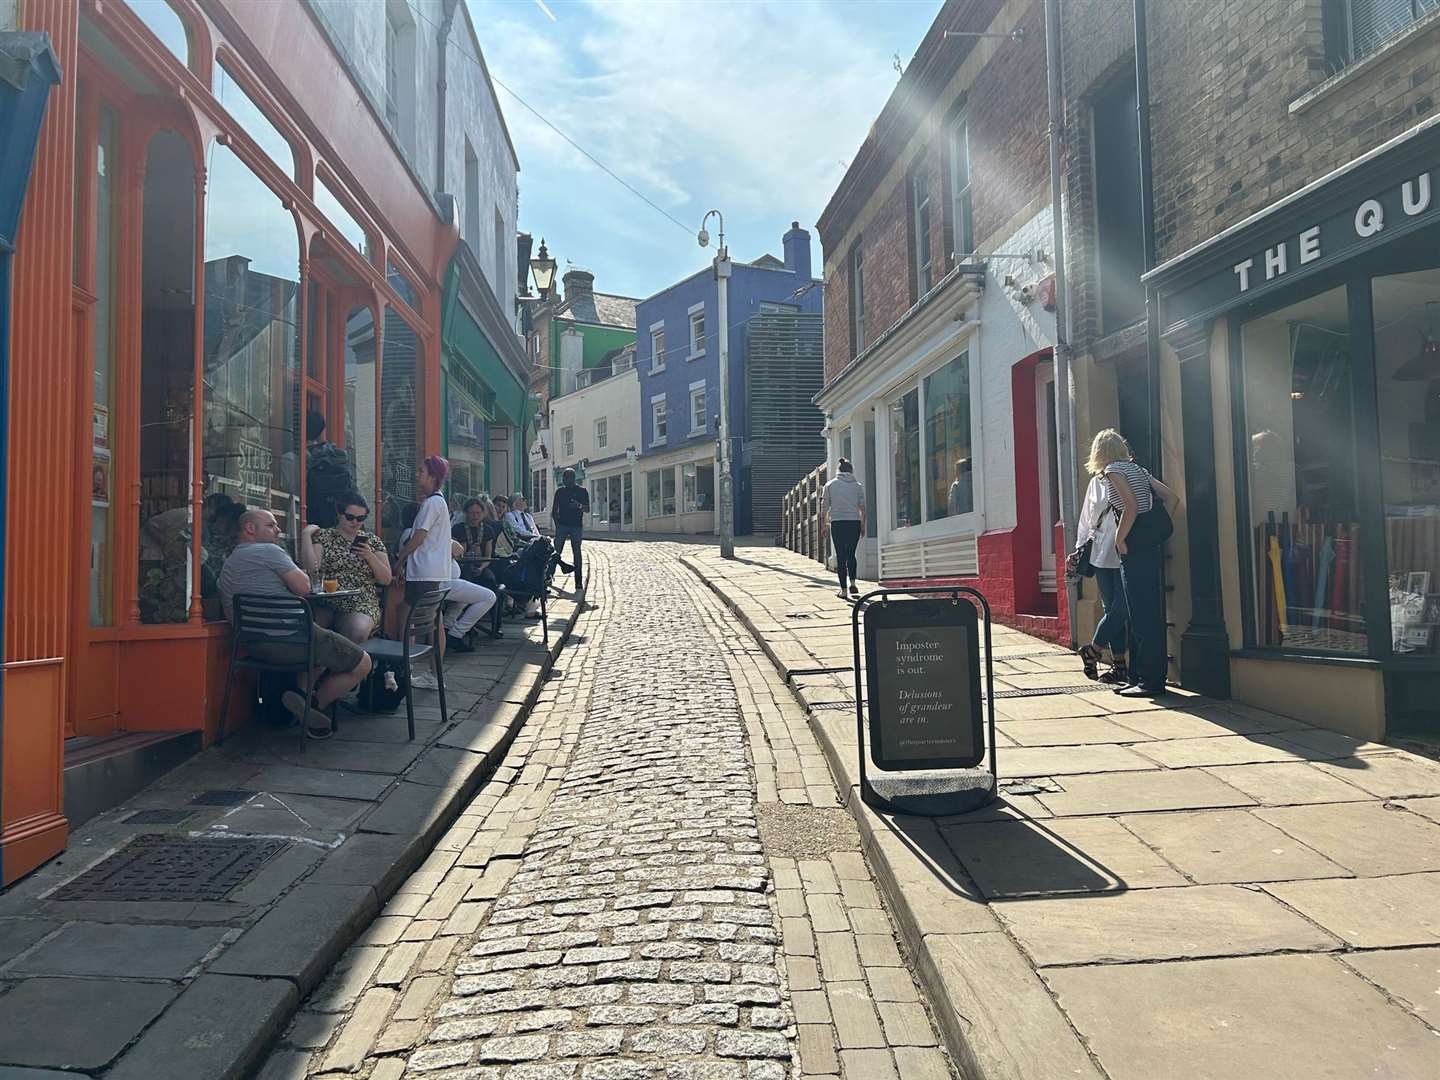 The Old High Street in Folkestone